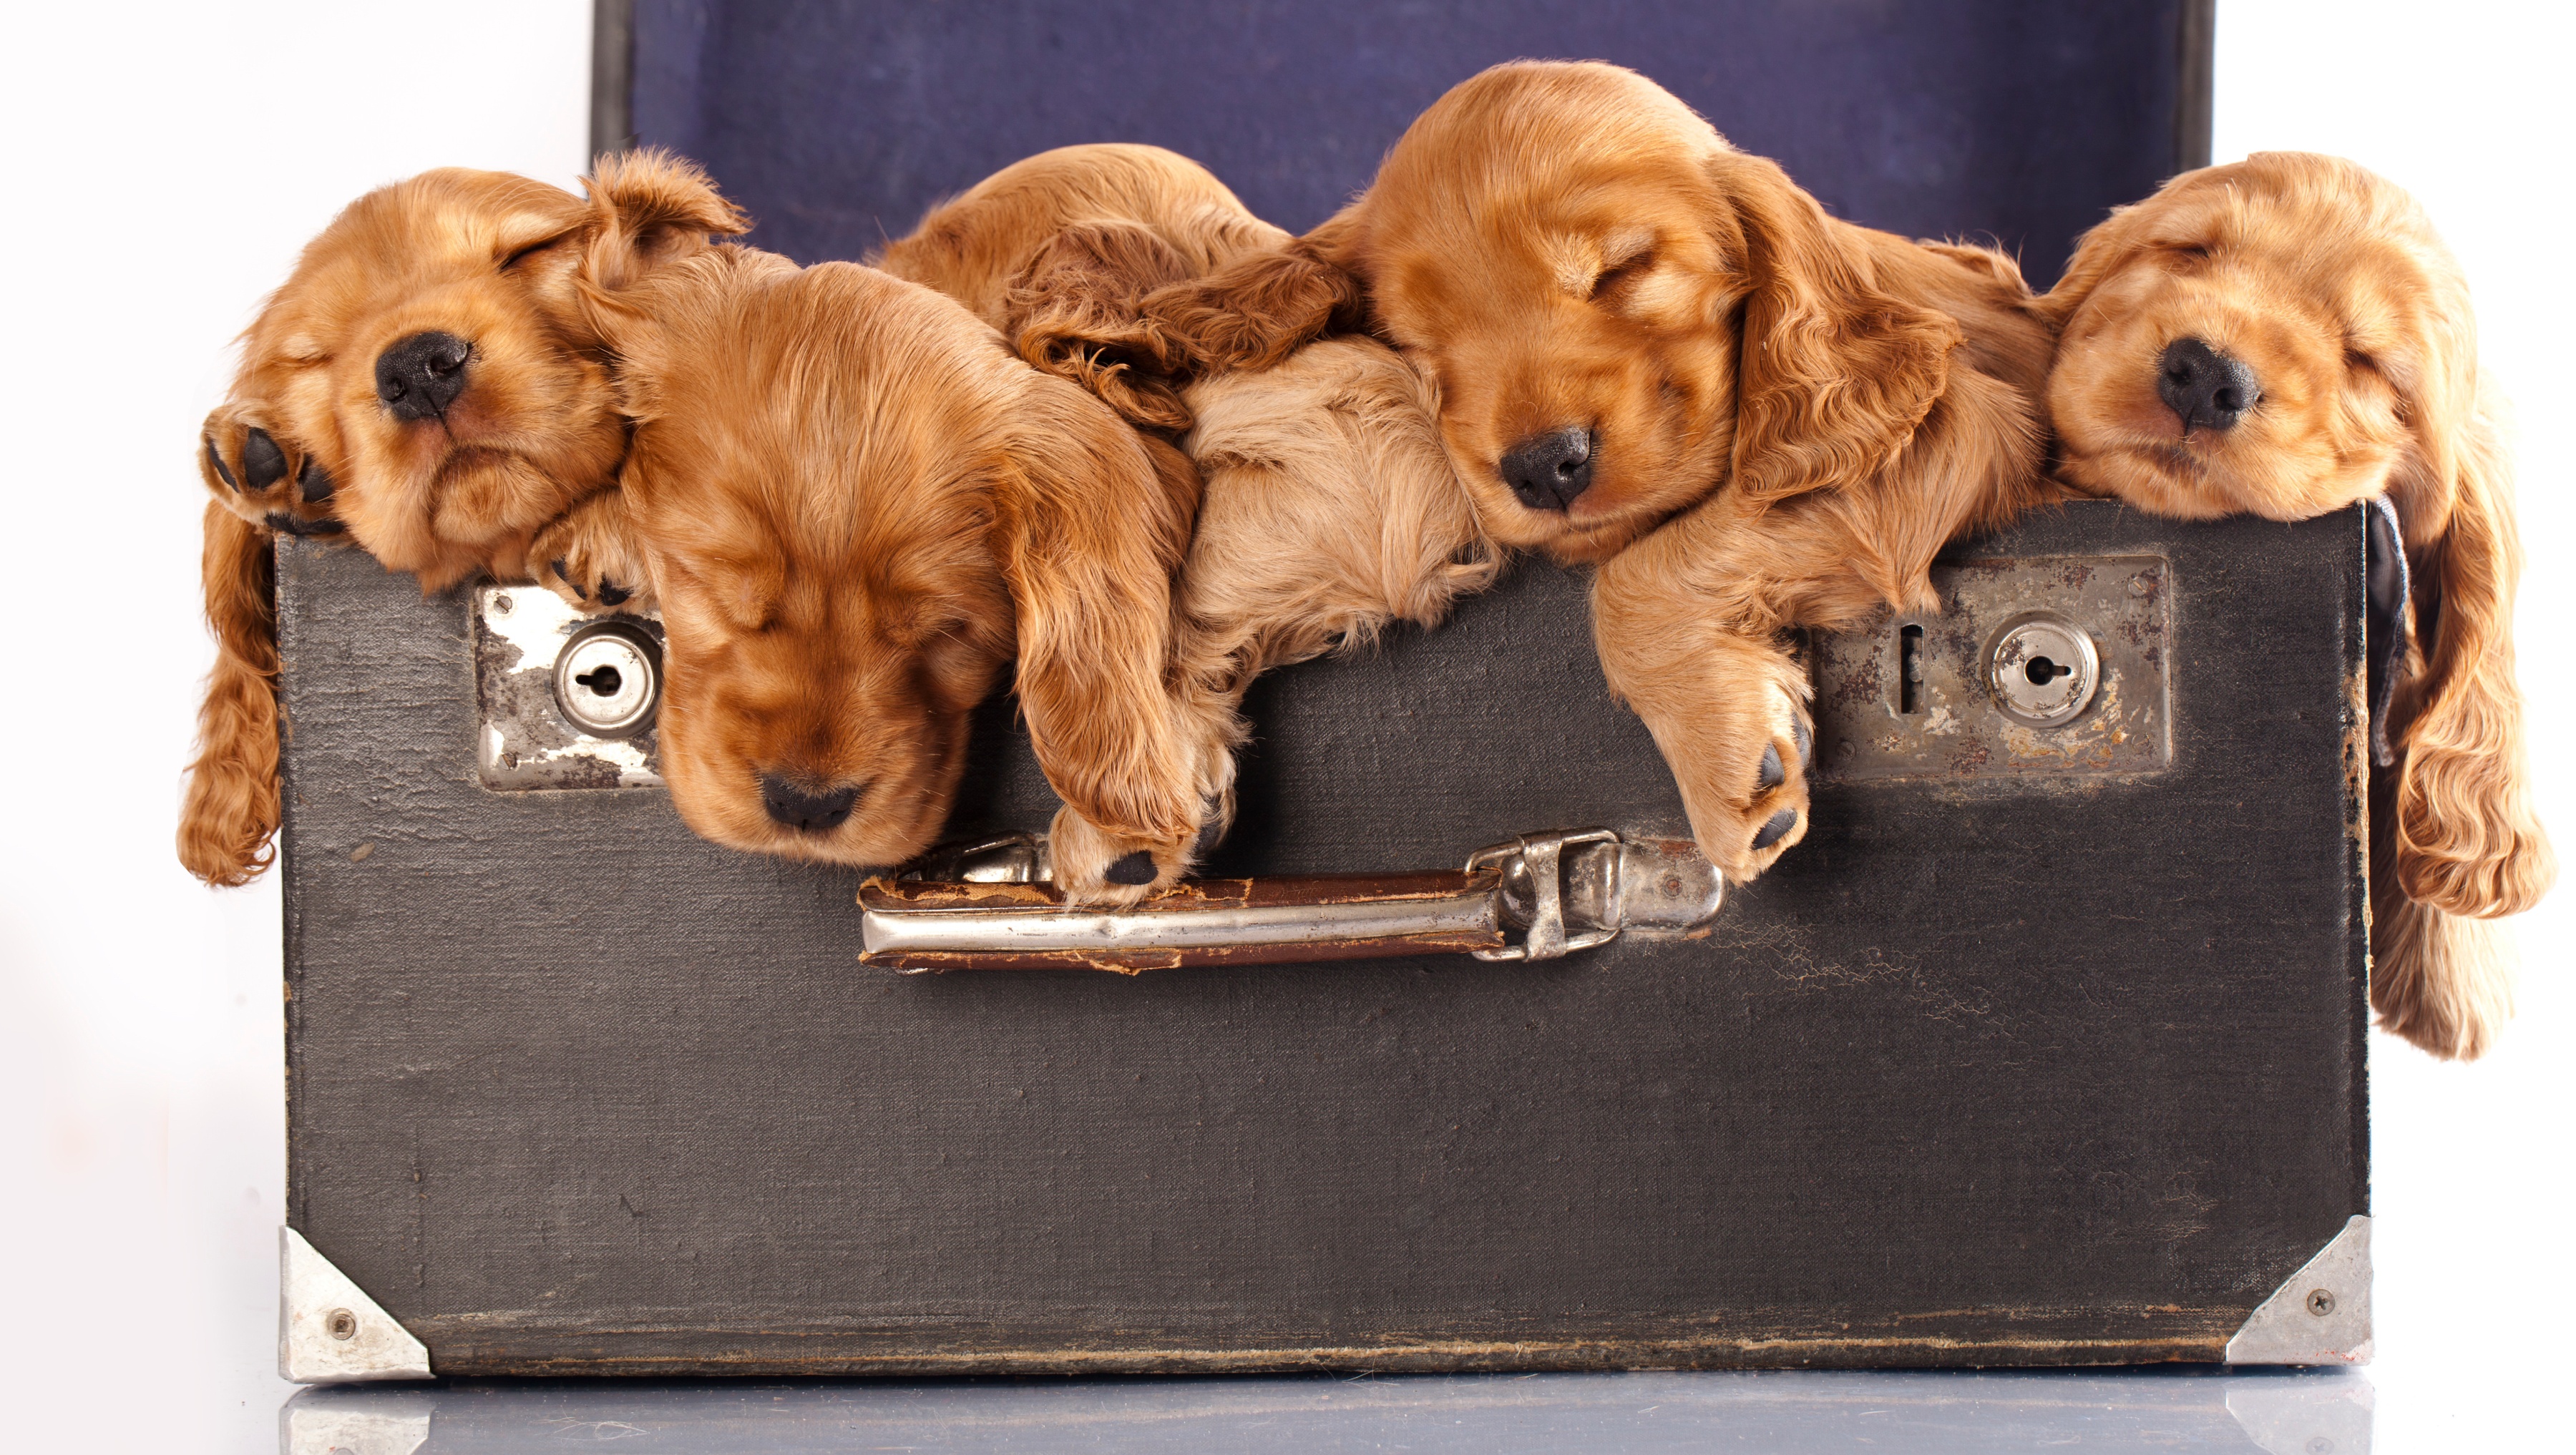 animal, spaniel, baby animal, dog, puppy, sleeping, suitcase, dogs